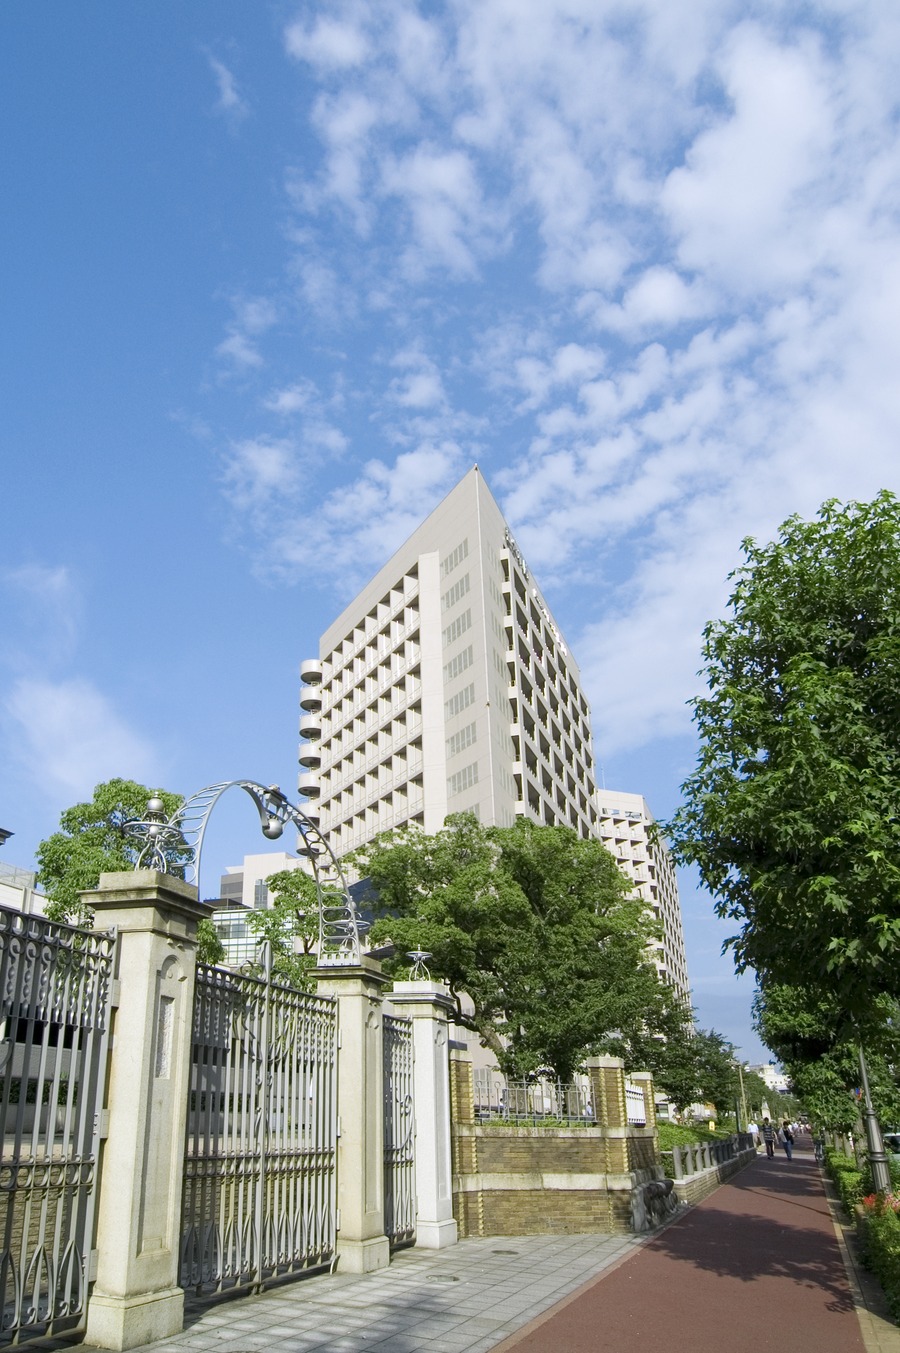 The Ward of Nagoya University Hospital